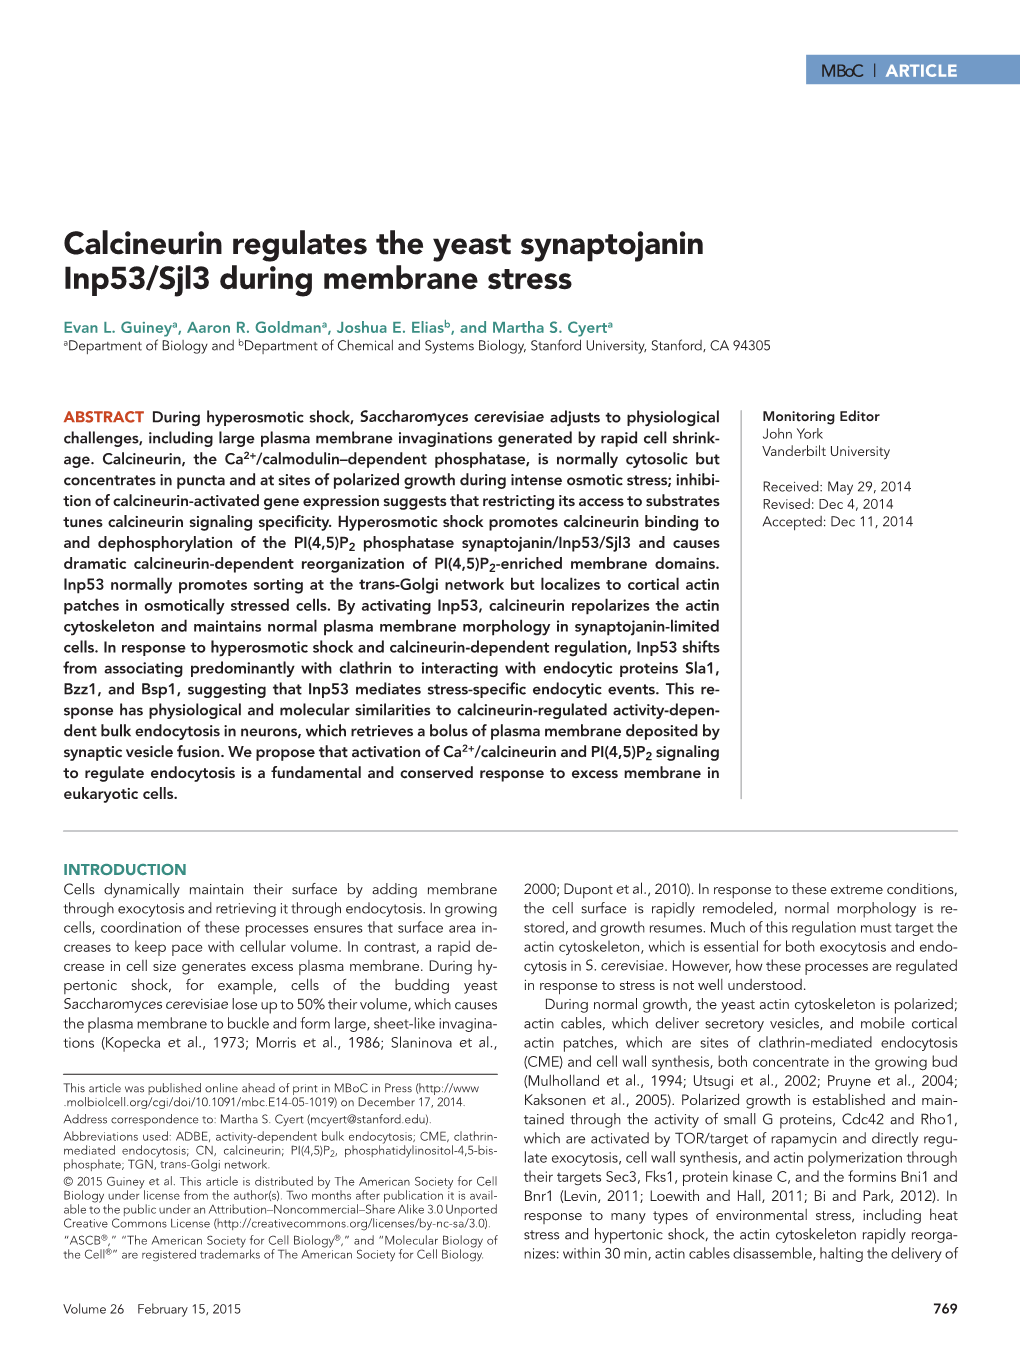 Calcineurin Regulates the Yeast Synaptojanin Inp53/Sjl3 During Membrane Stress